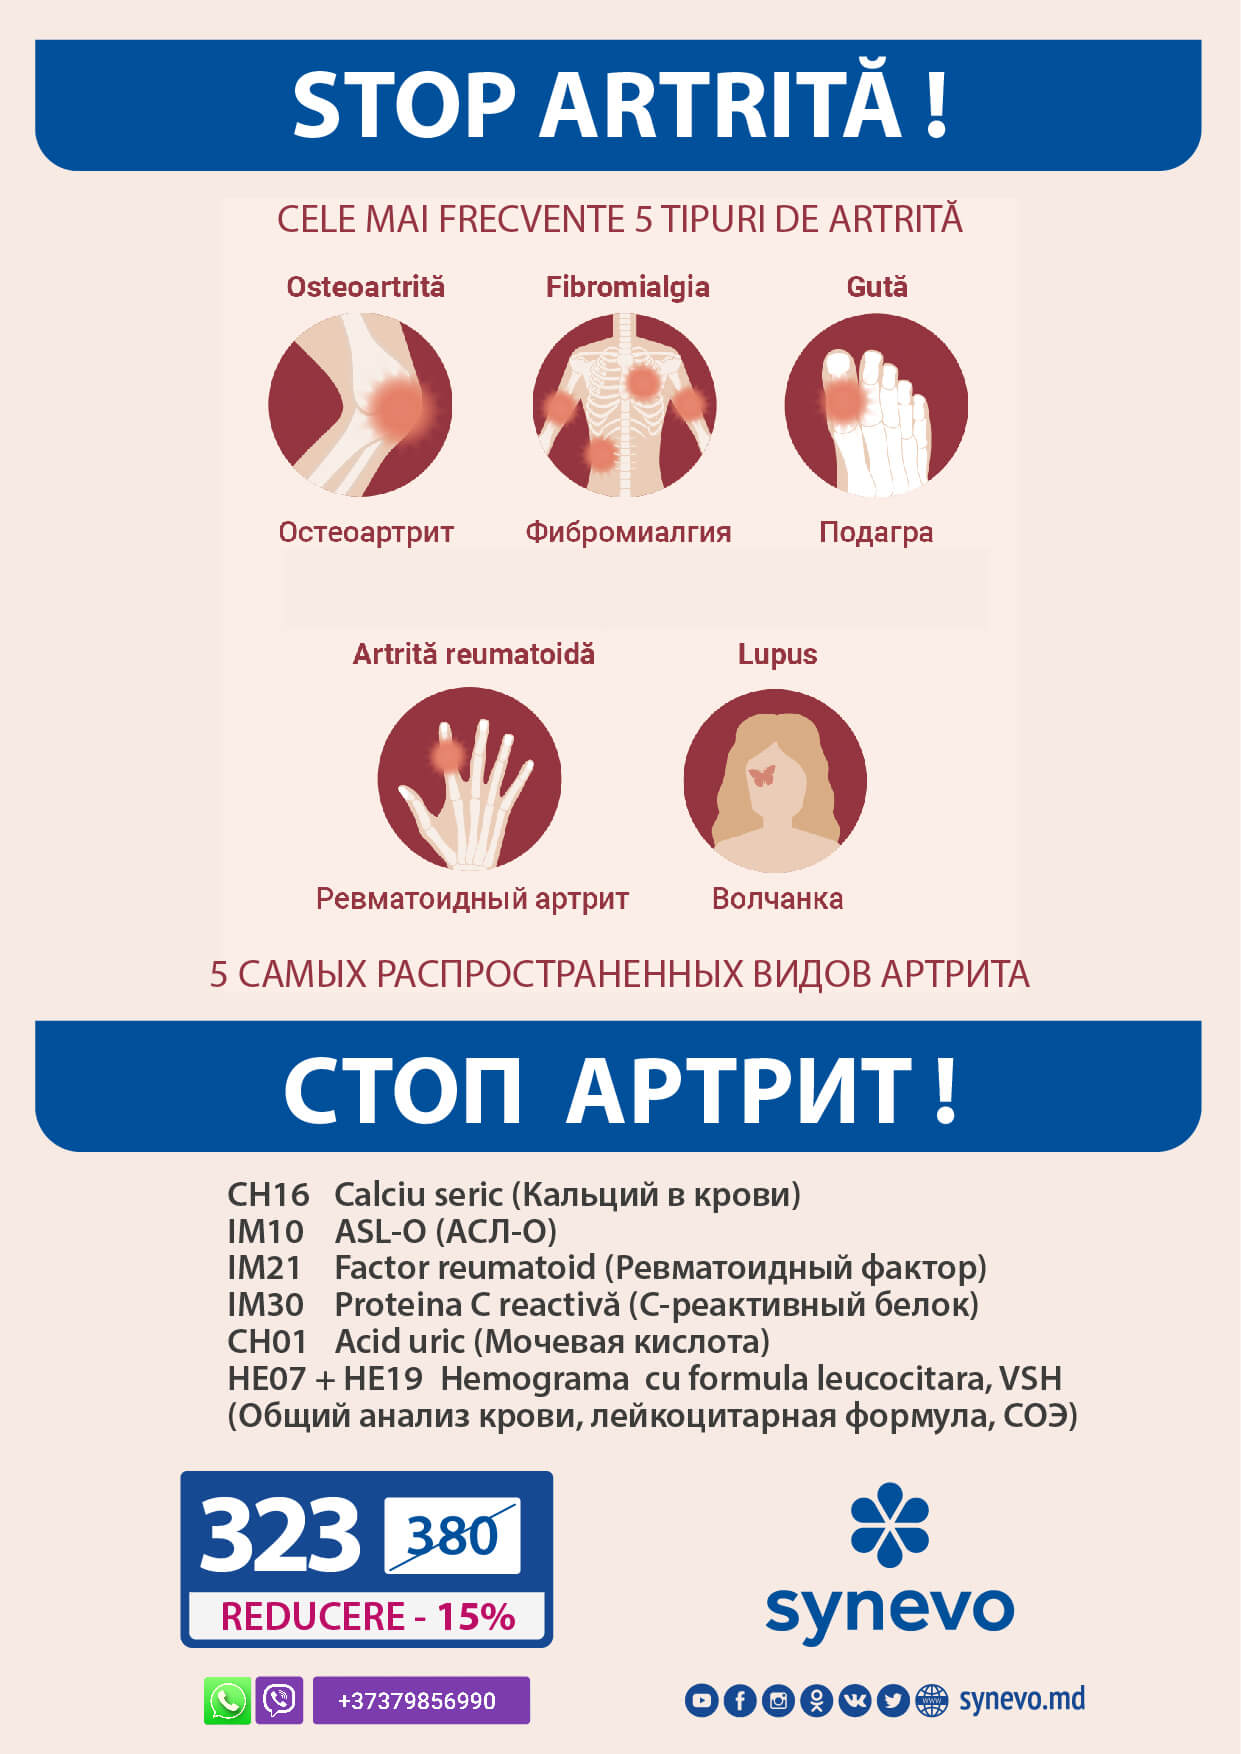 synevo factor reumatoid)